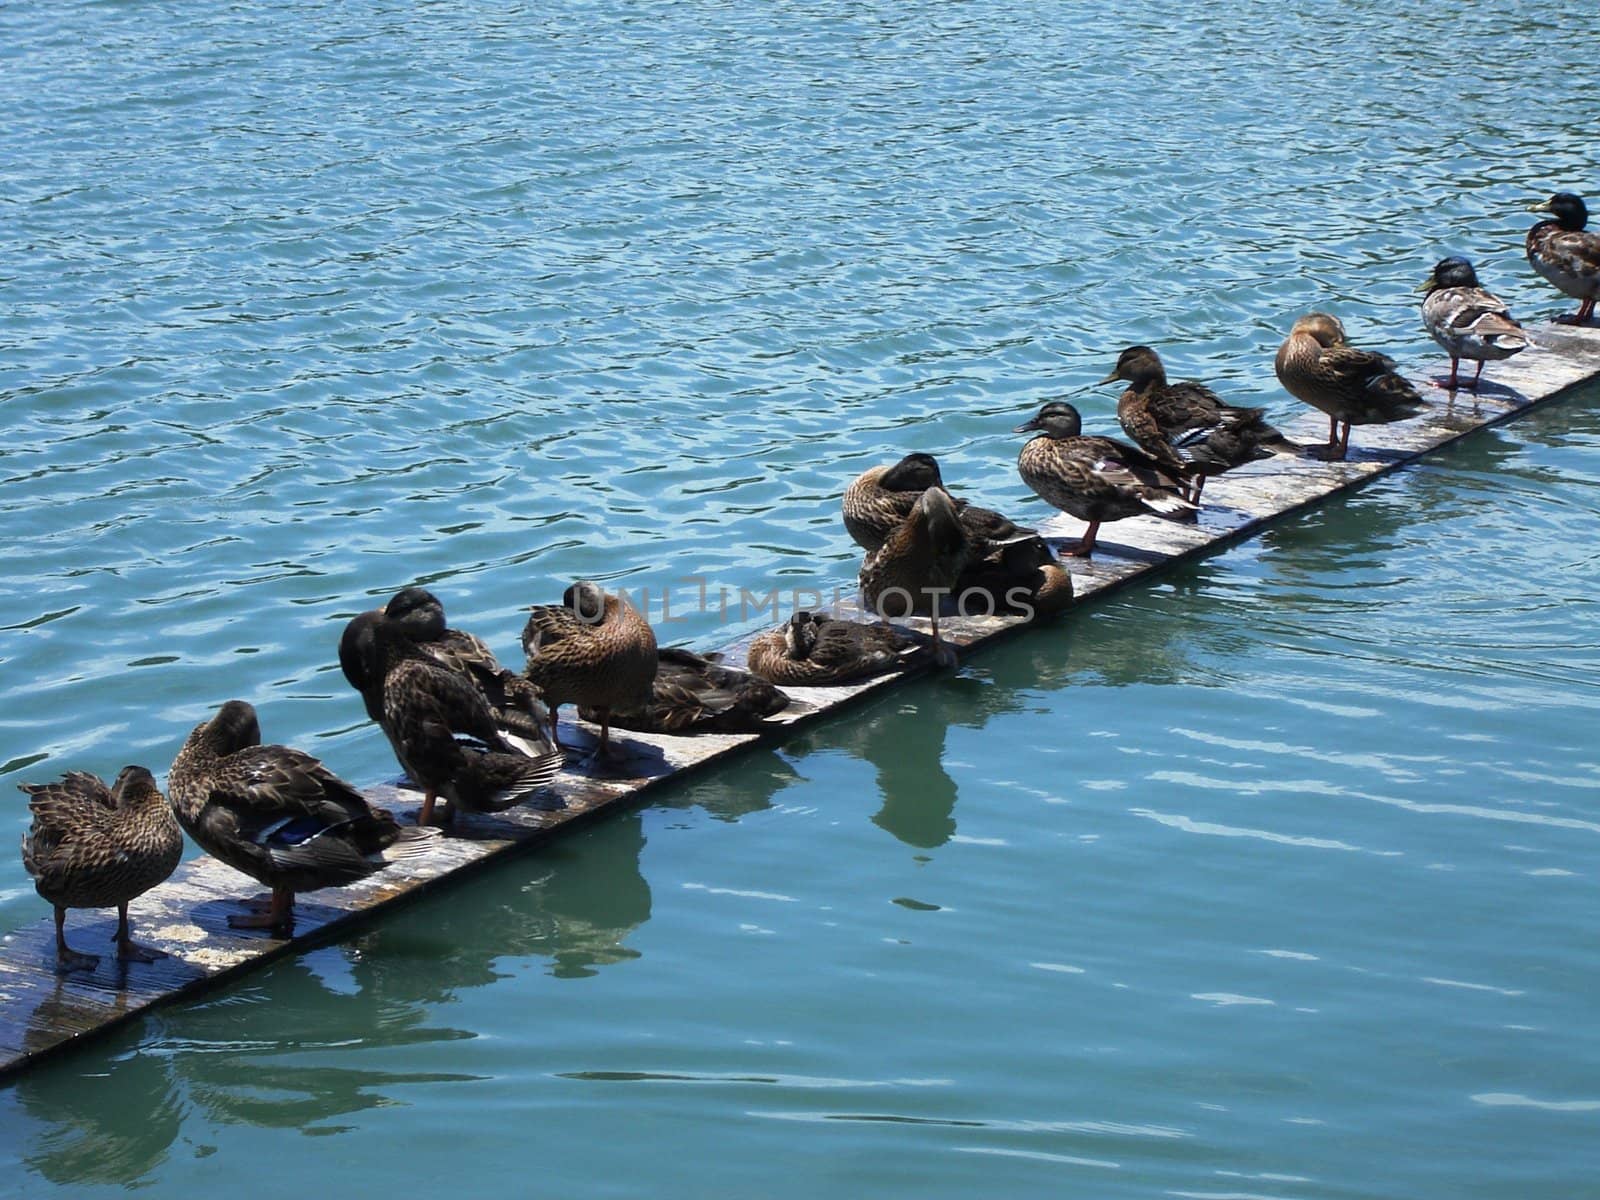 Ducks on a board by RefocusPhoto